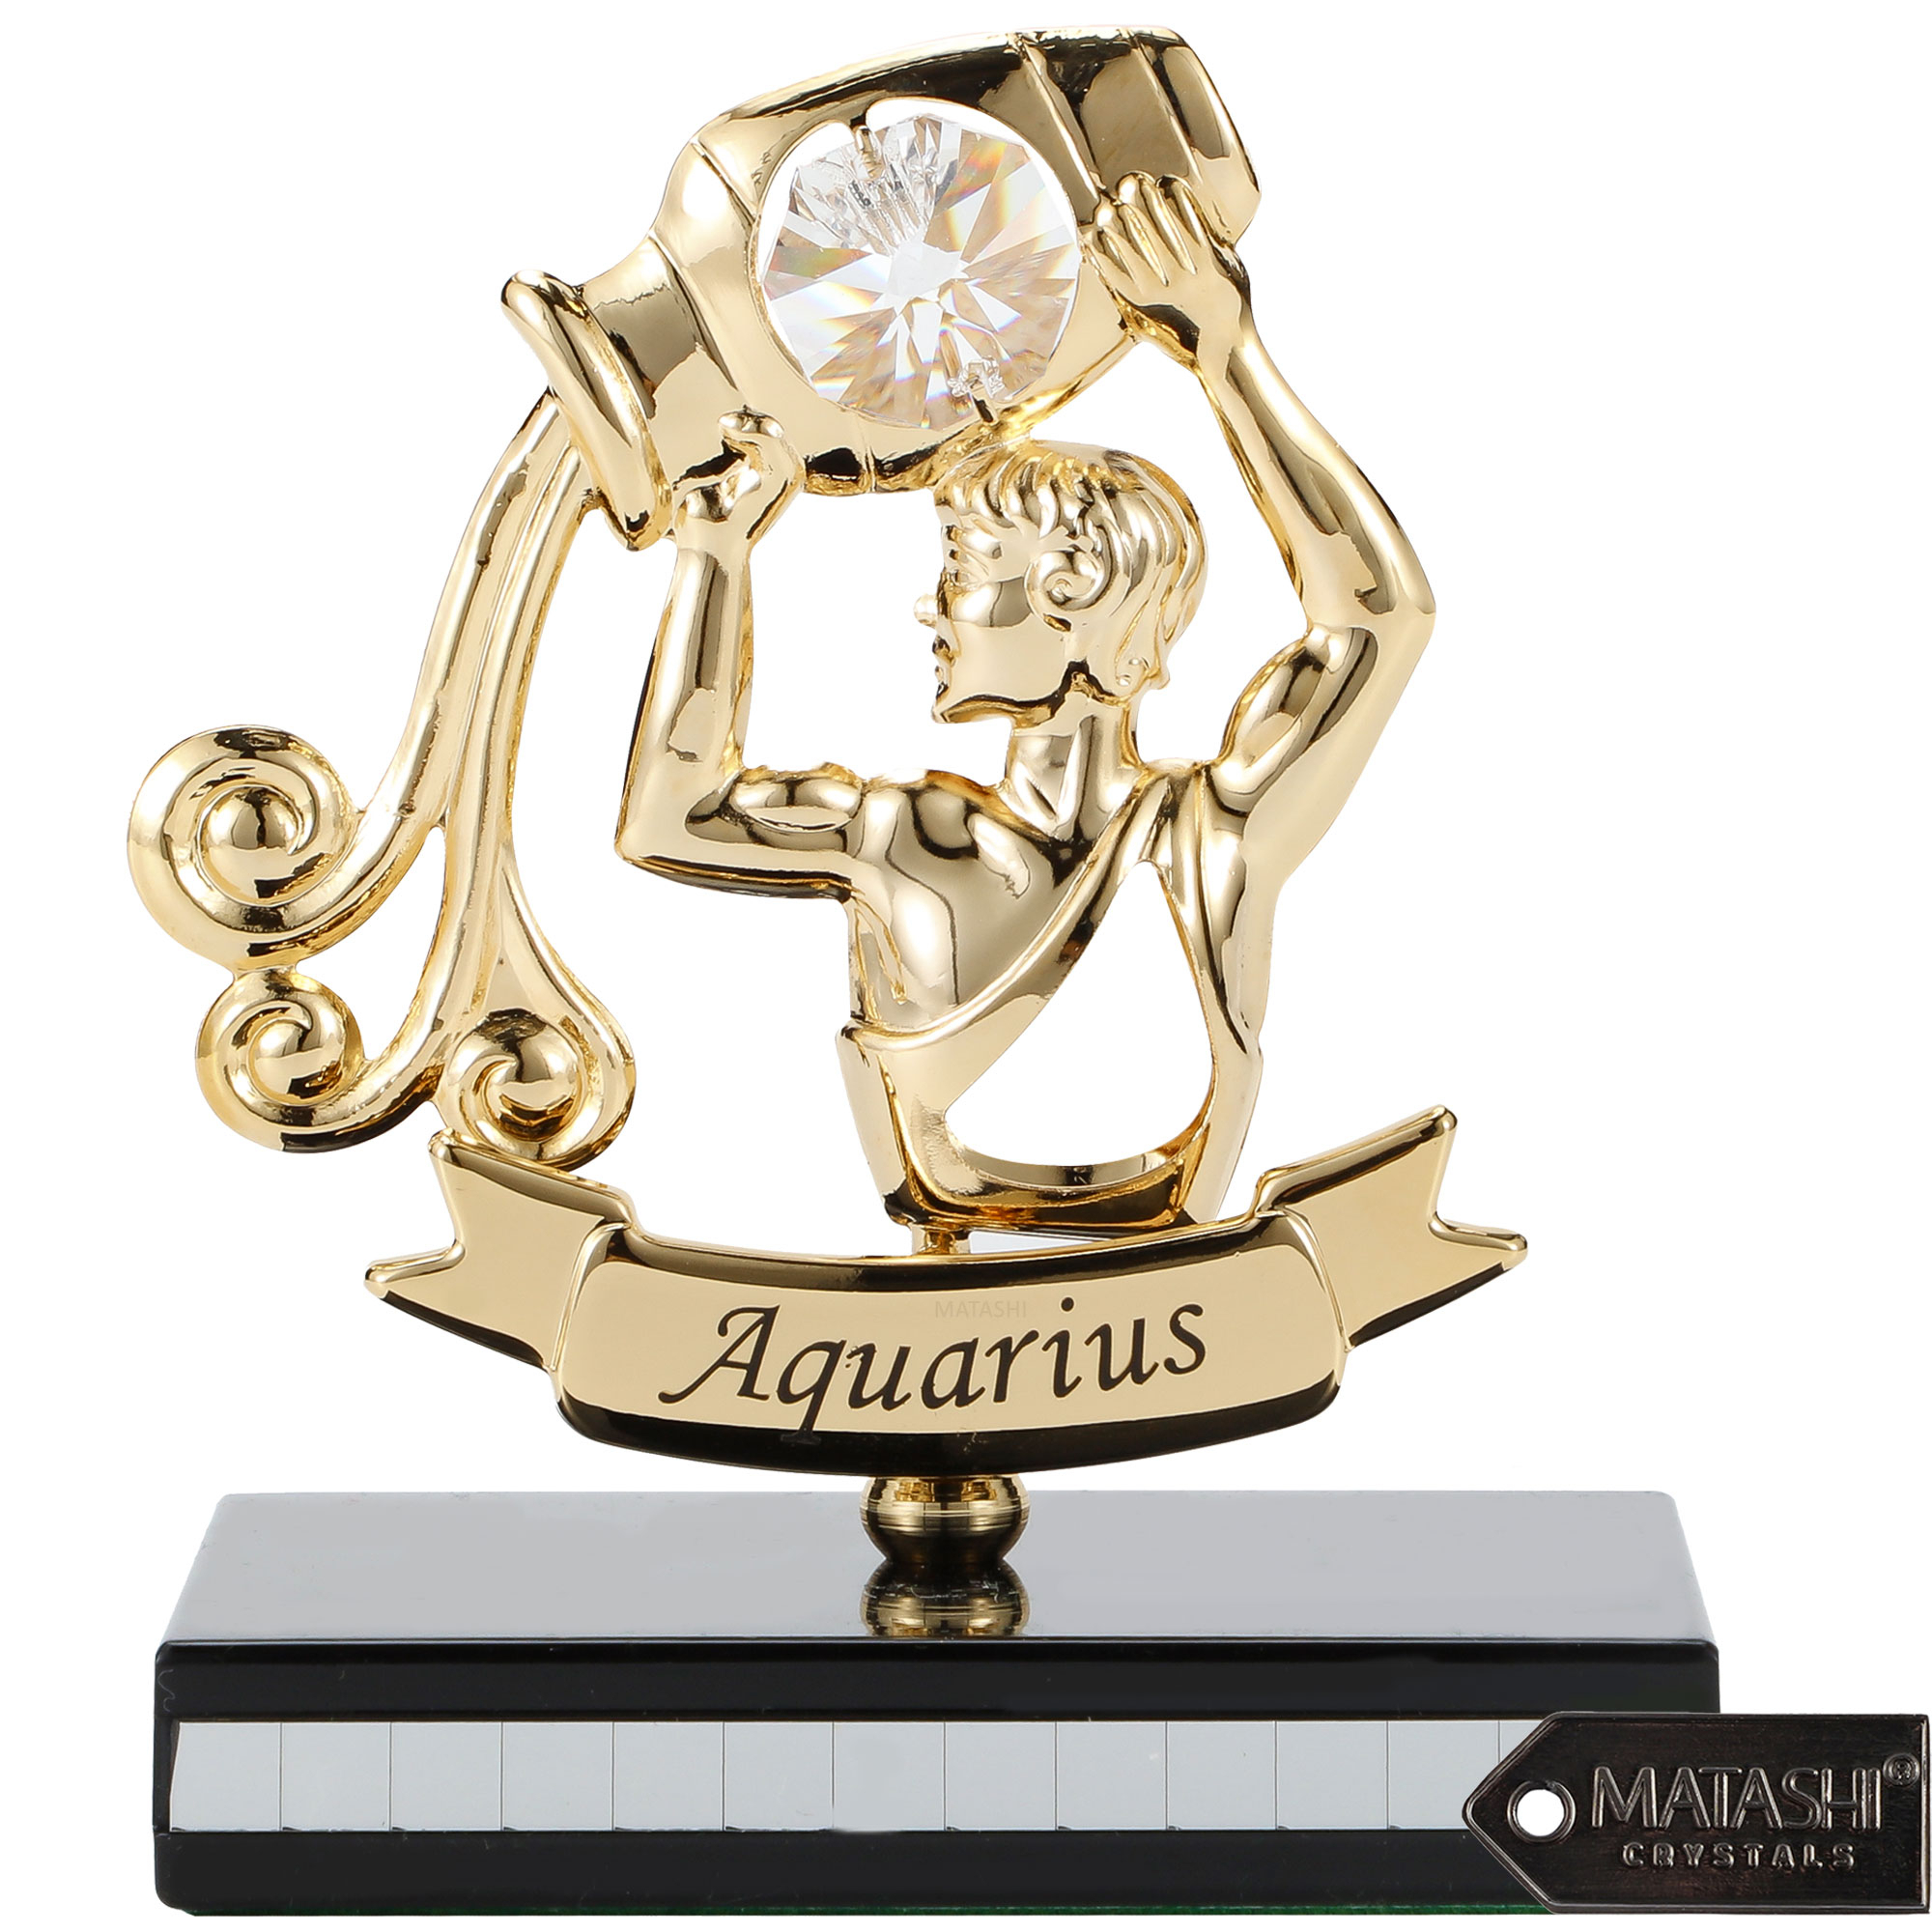 Matashi 24K Gold Plated Zodiac Astrological Sign Aquarius Figurine Statuette On Stand Studded With Matashi Crystals